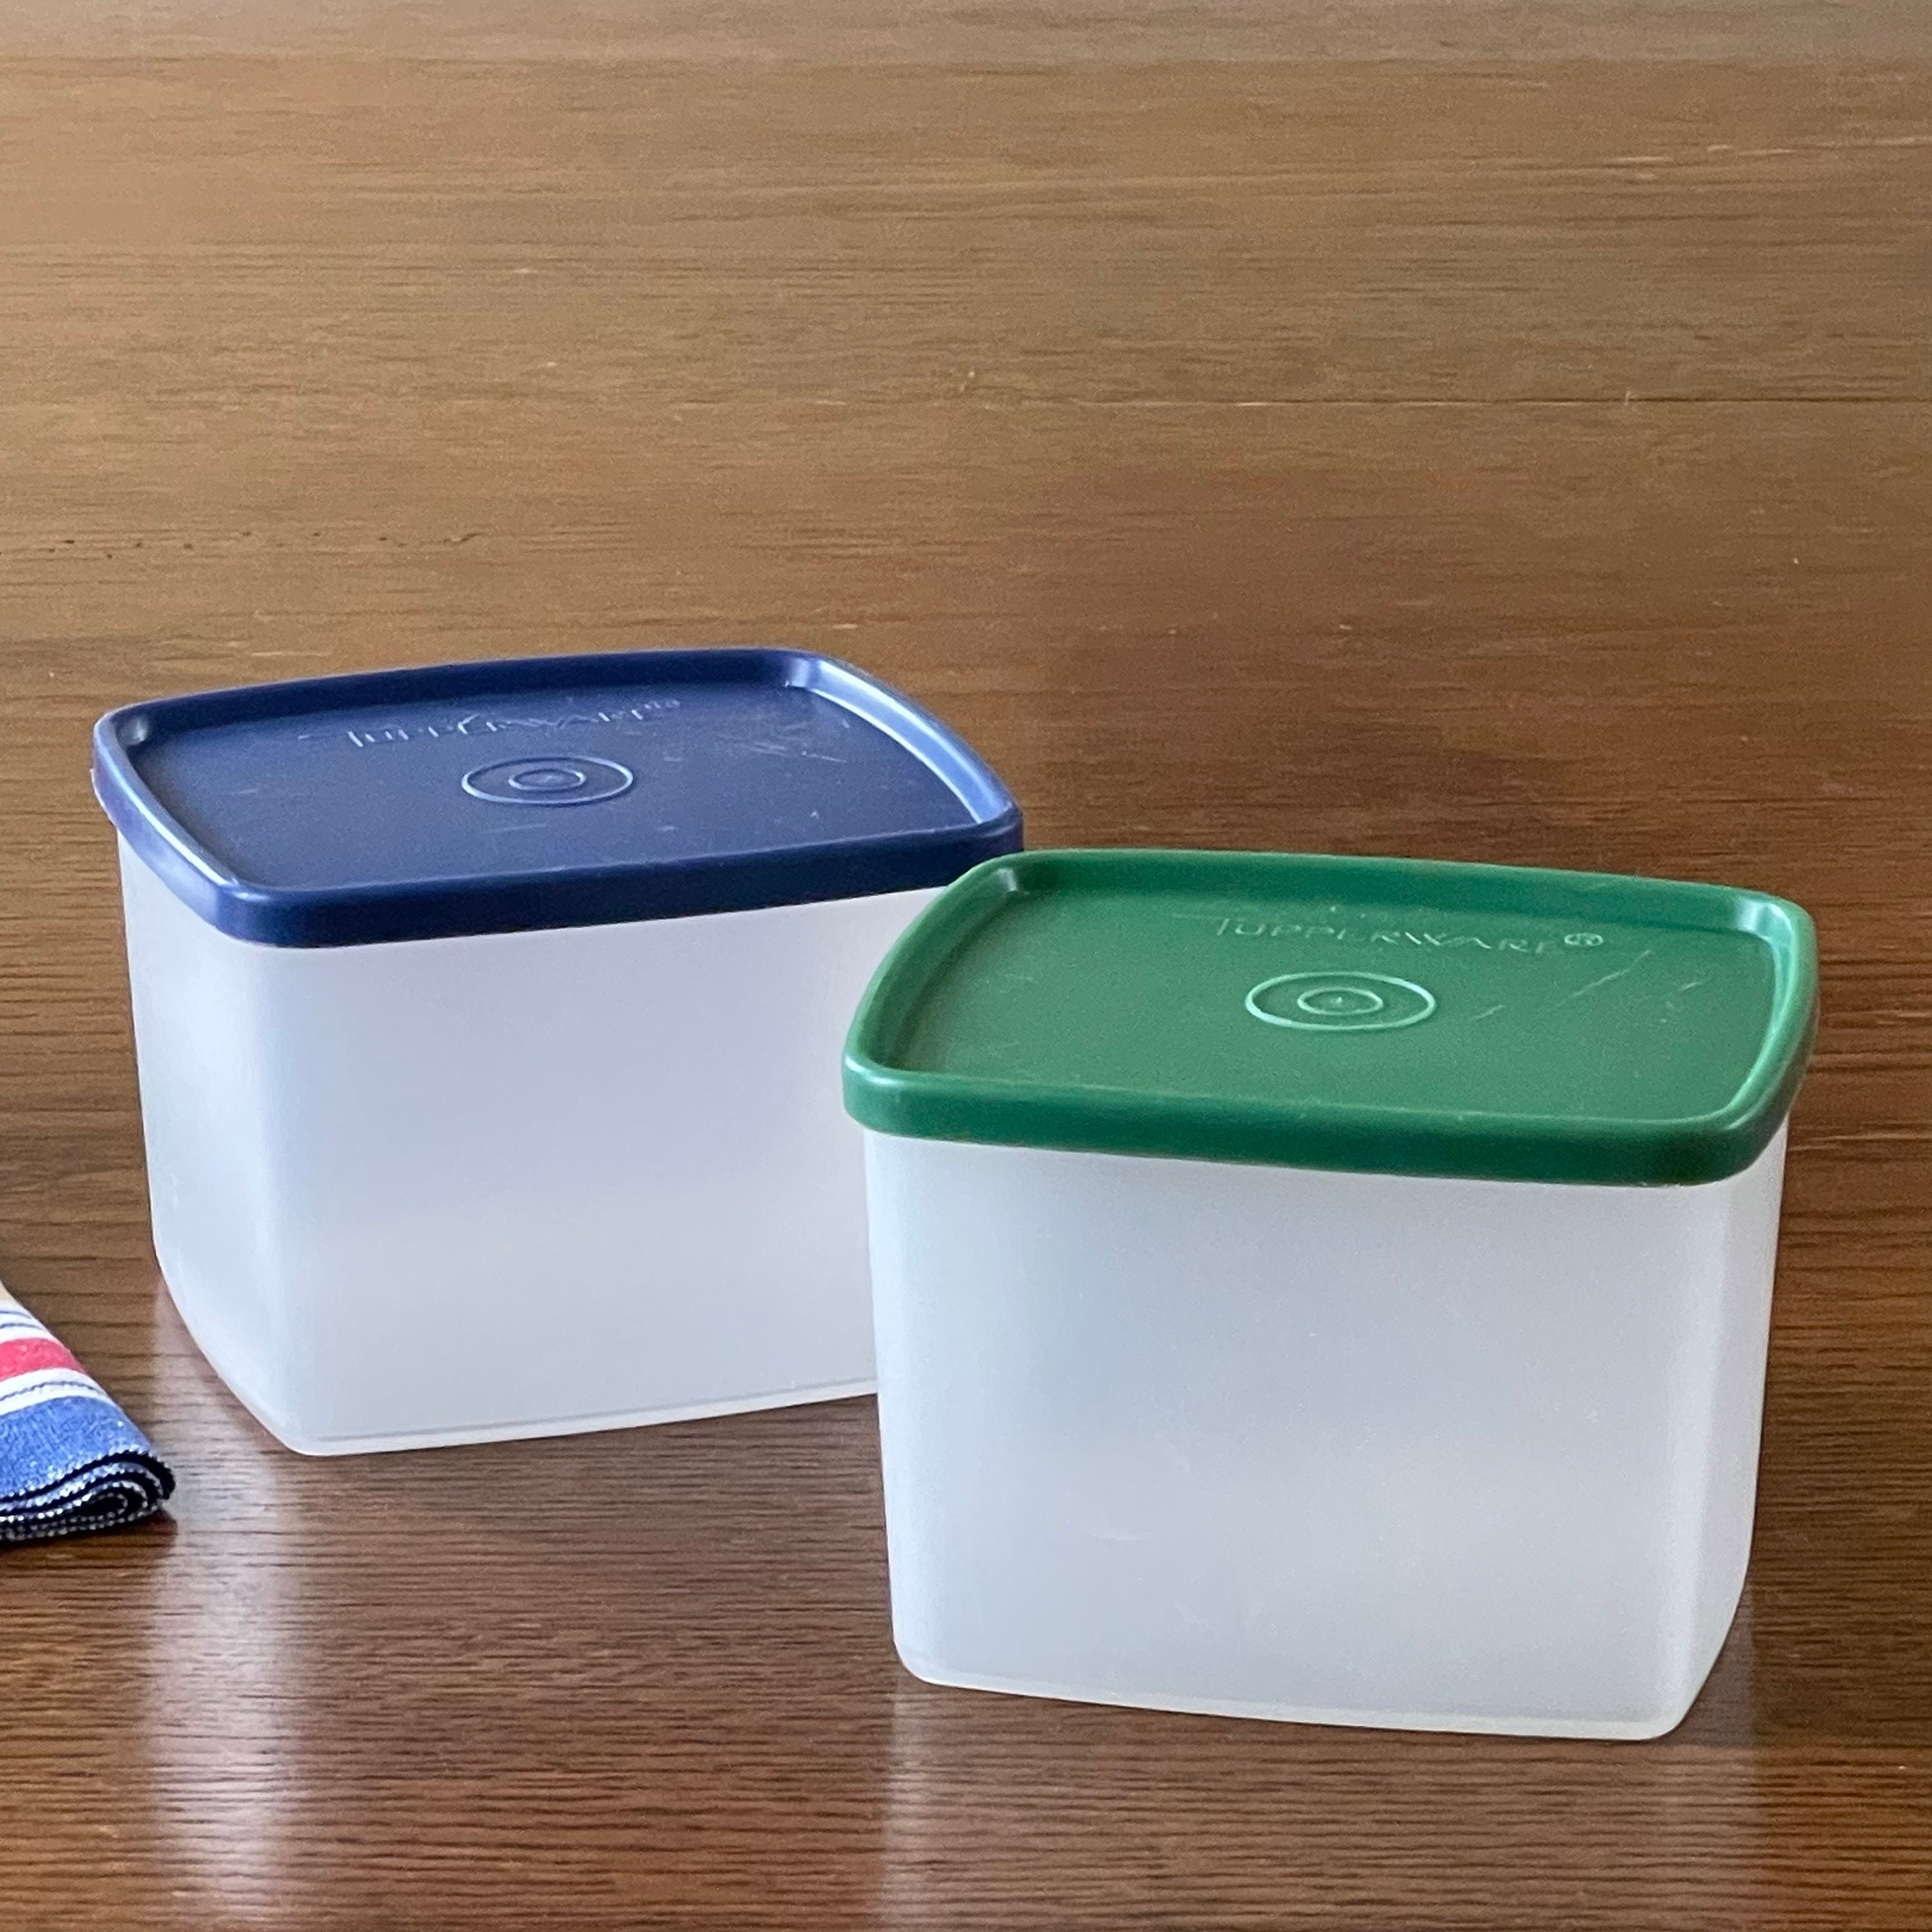 Tupperware Freezer Mates Plus Small Shallow 450ml Papaya Lid Container 